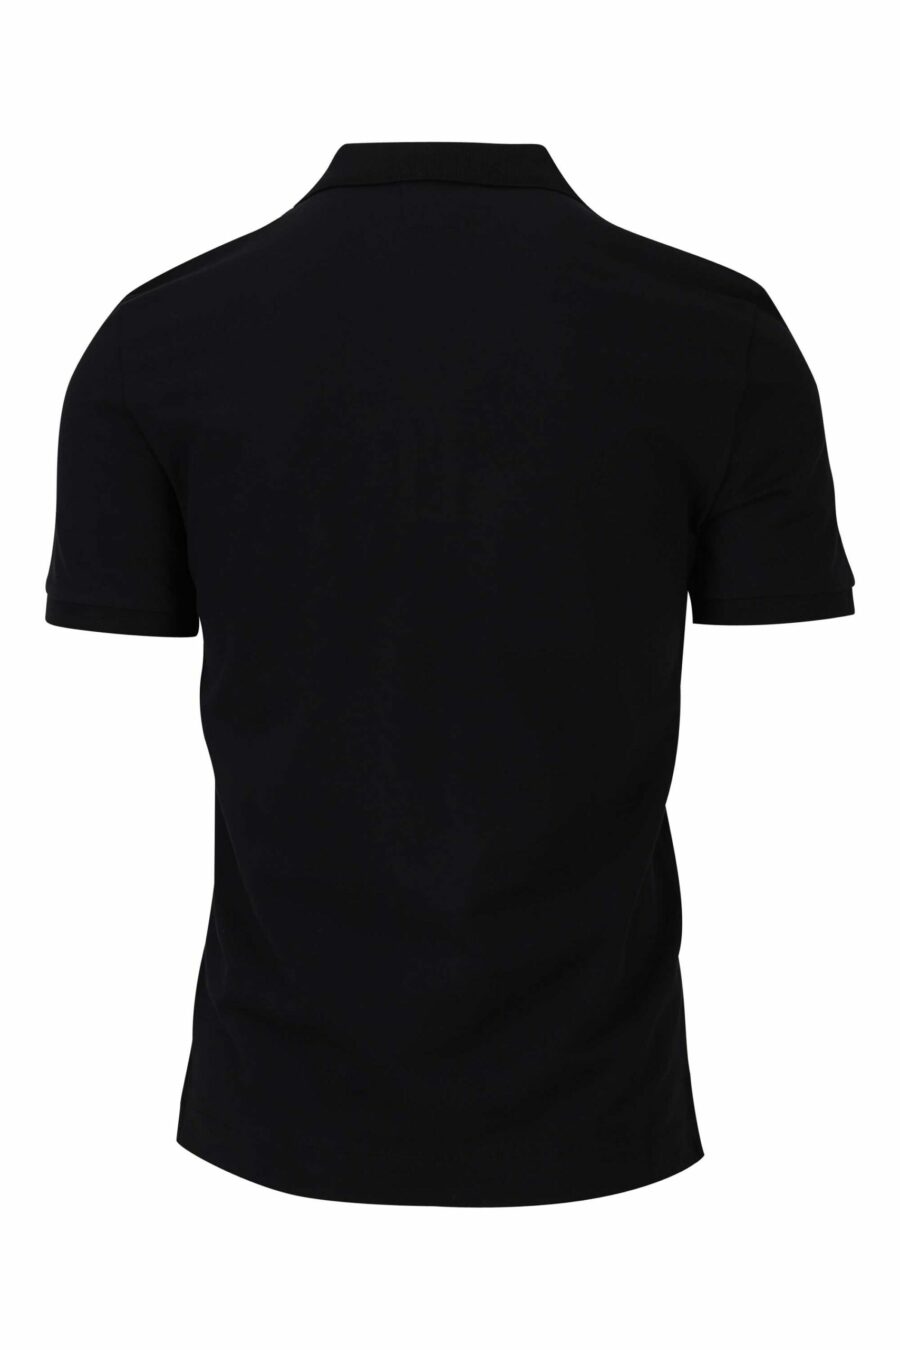 Schwarzes Poloshirt mit Mini-Logoaufnäher - 7620943564884 1 1 skaliert